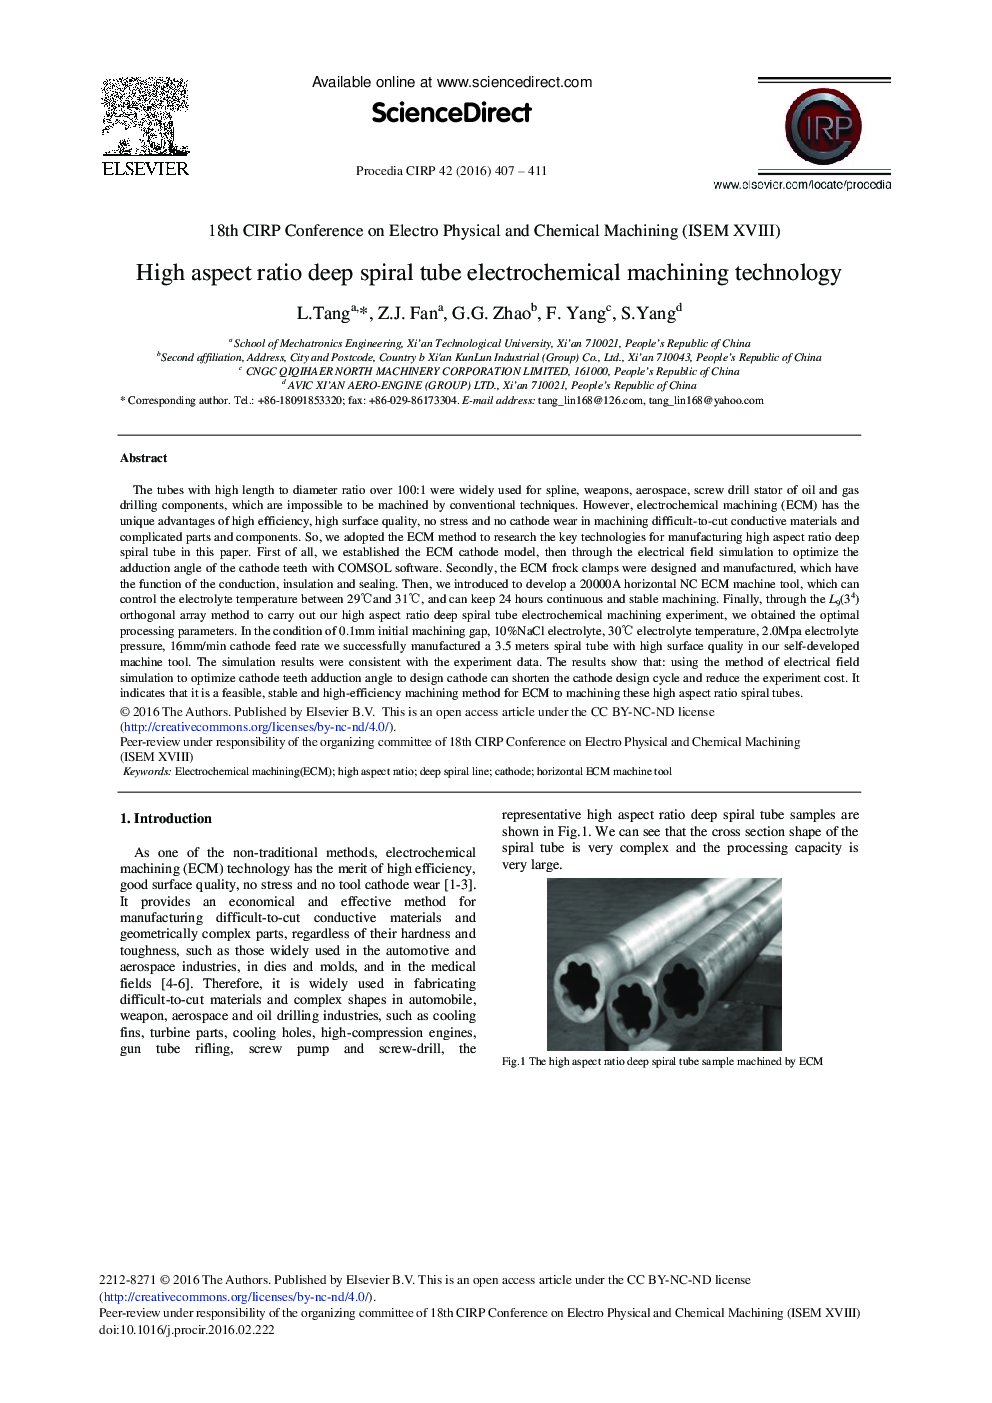 High Aspect Ratio Deep Spiral Tube Electrochemical Machining Technology 